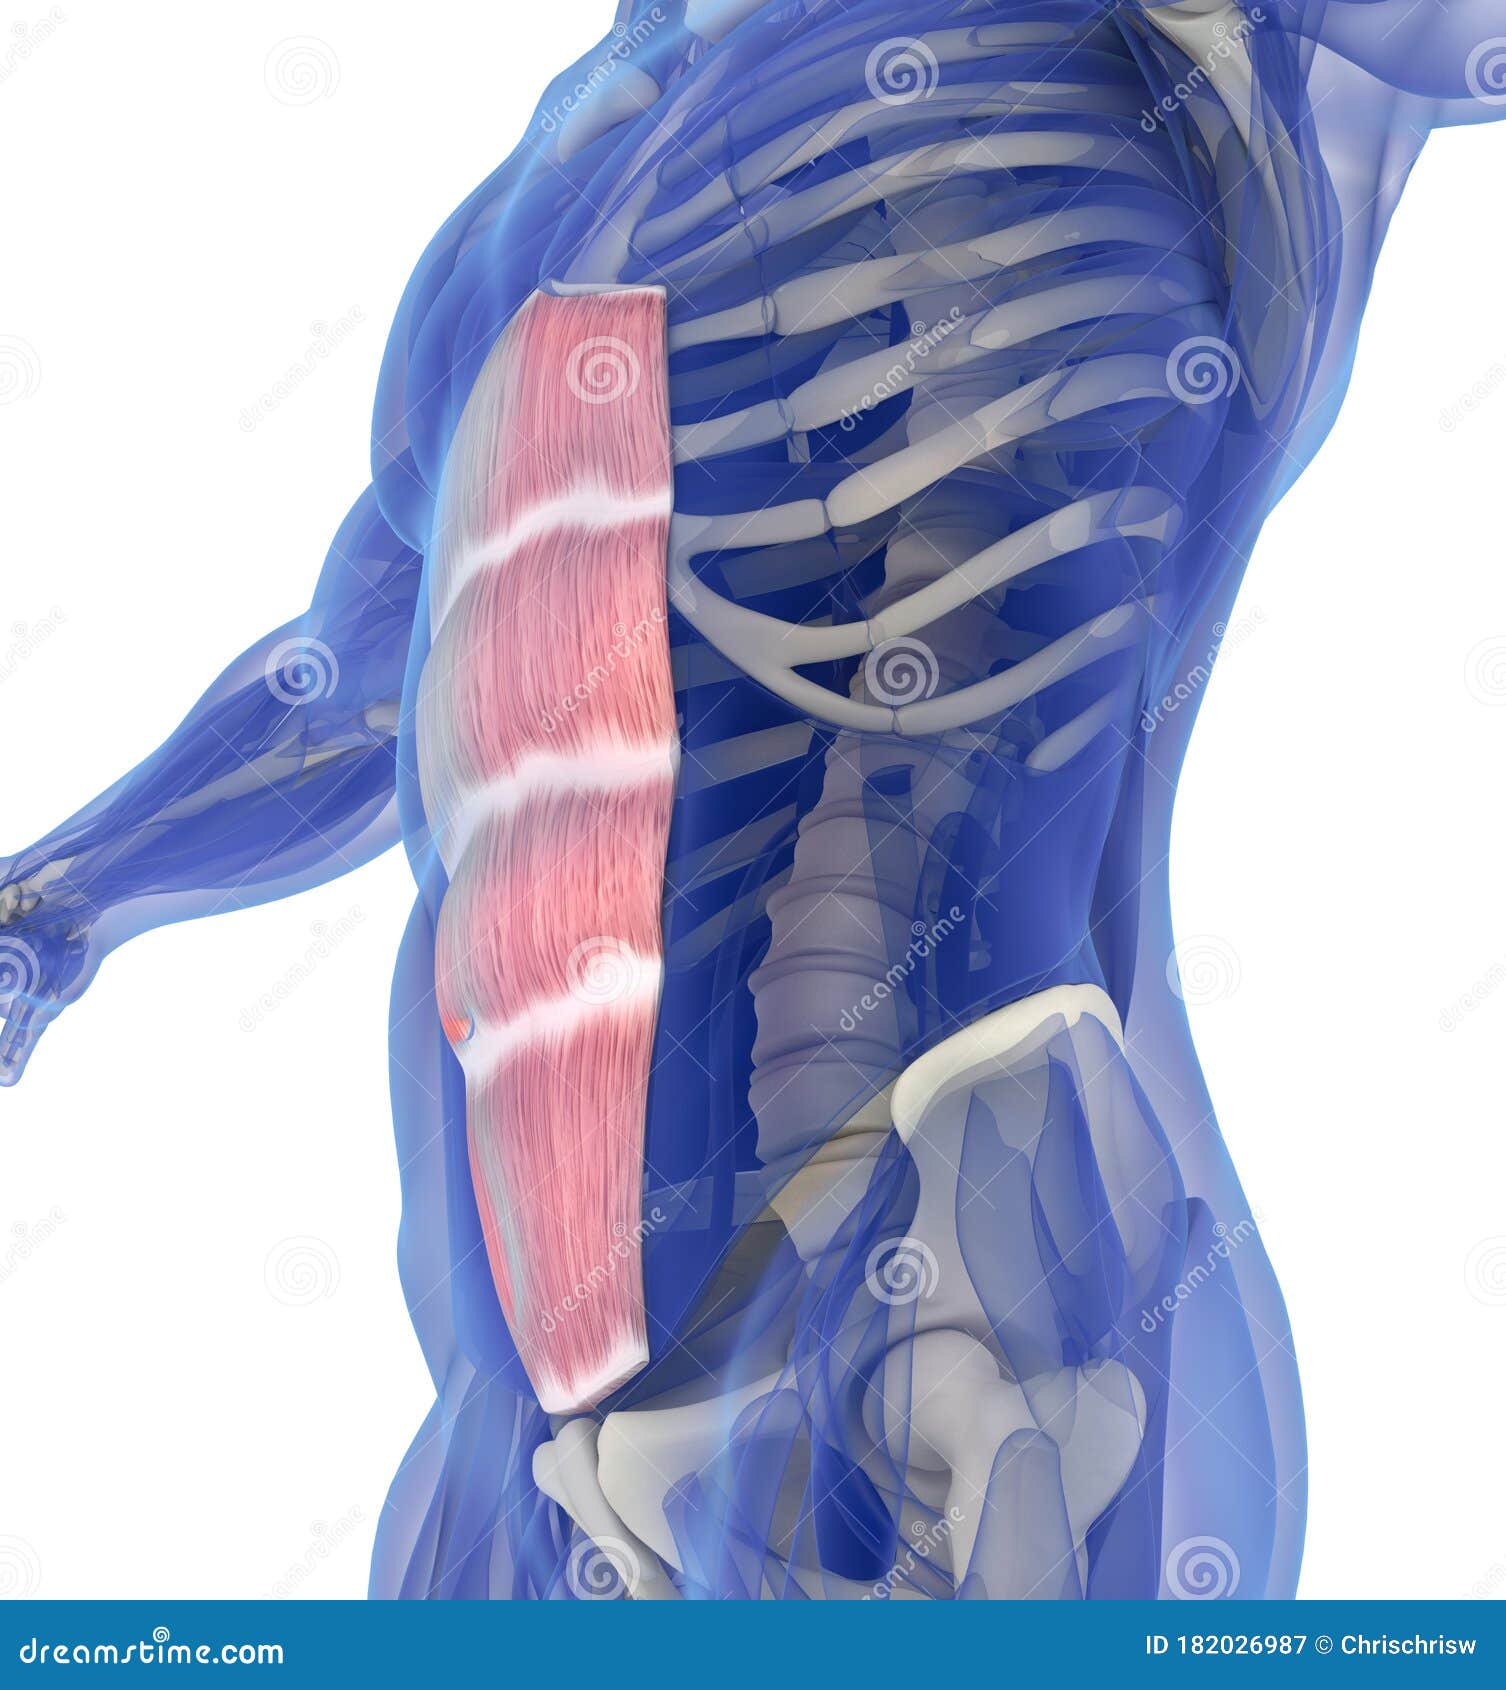 rectus abdominus, stomach muscles, human anatomy.